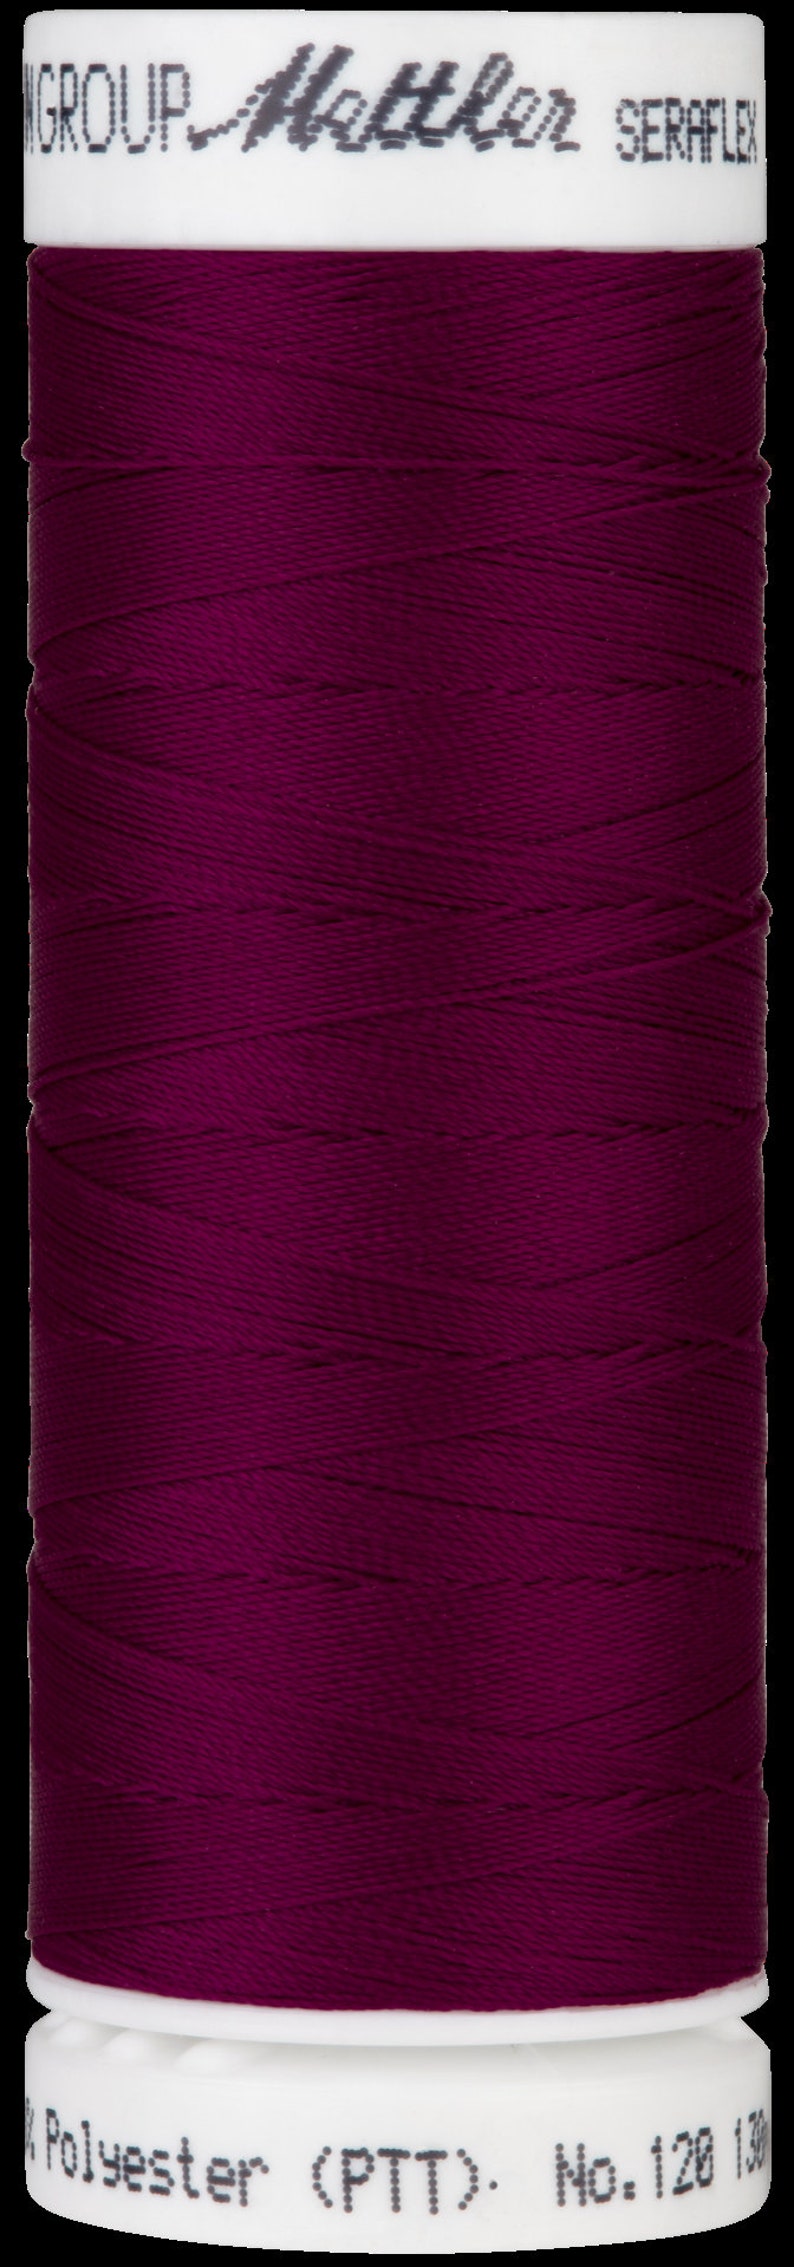 NEUE Farben Seraflex 120 flexibler Faden Nähfaden pink rosa blau Mettler dark current